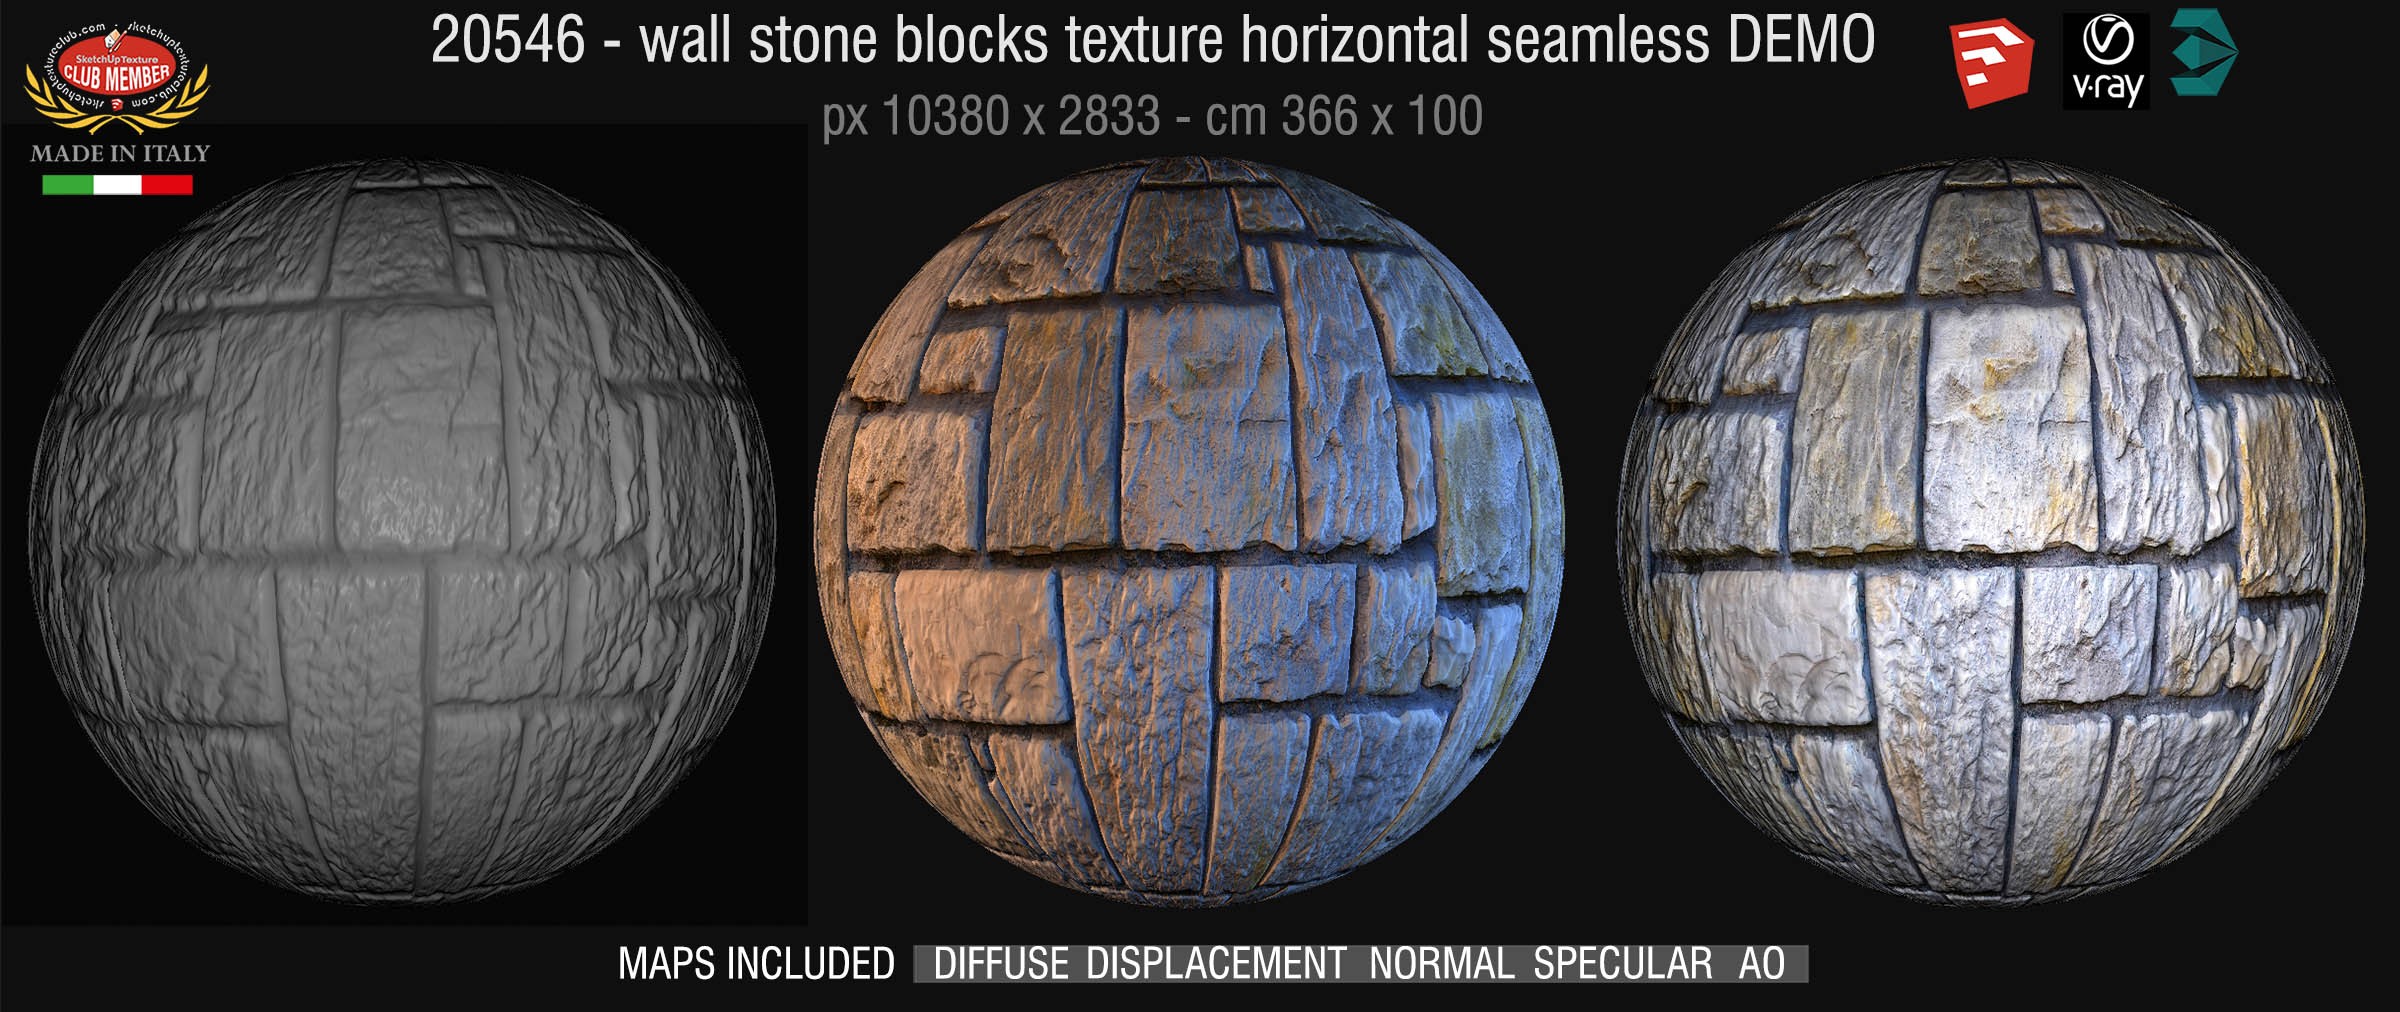 20546 HR wall stone blocks texture + maps DEMO